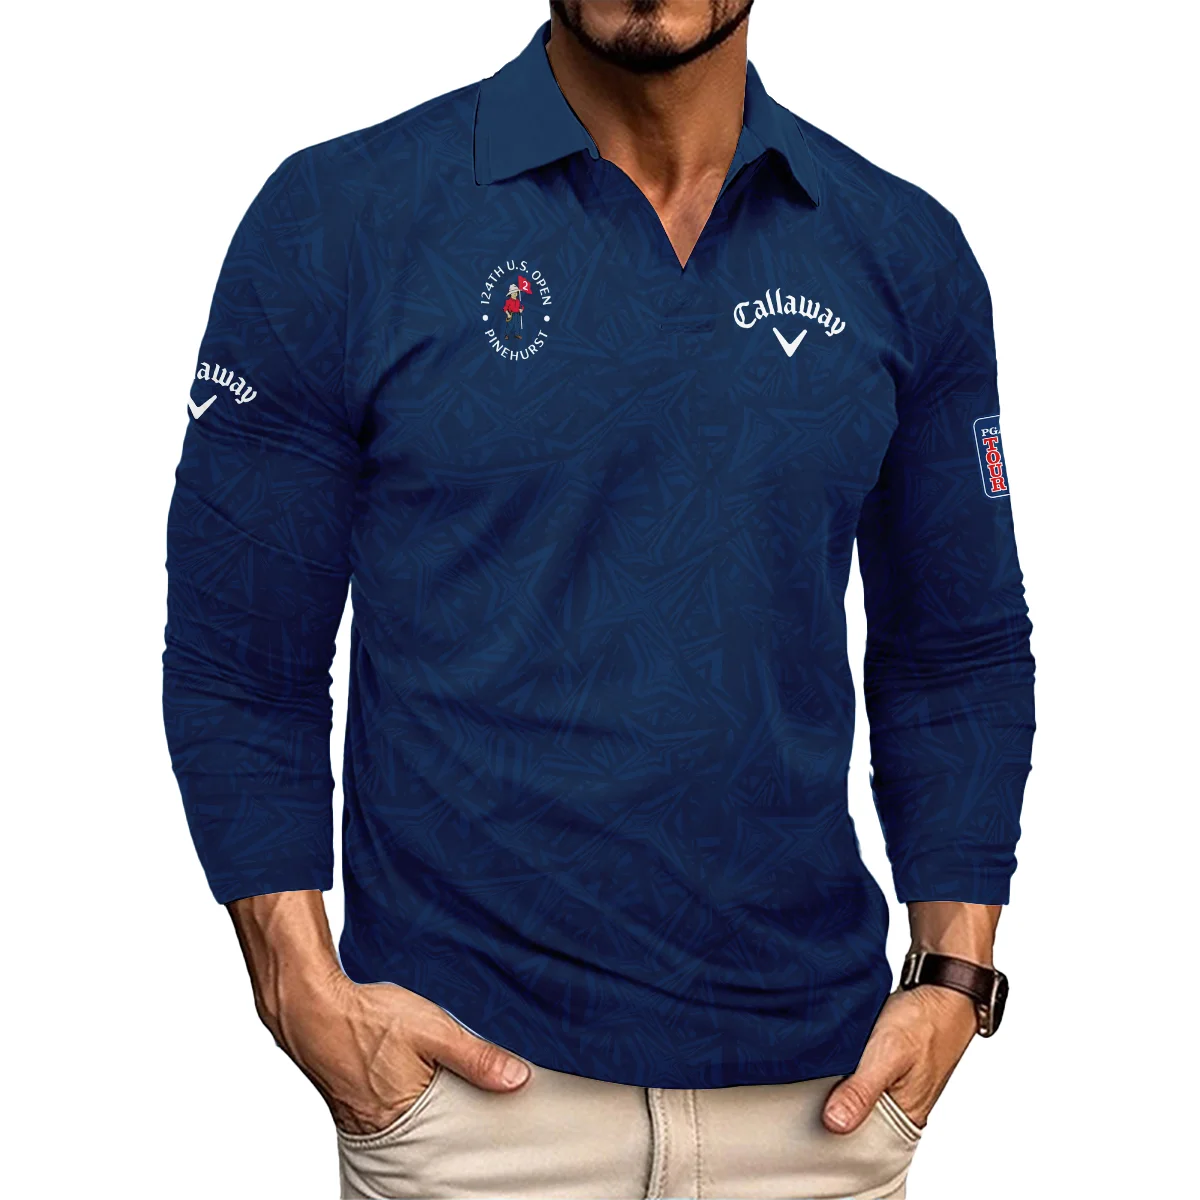 Callaway 124th U.S. Open Pinehurst Stars Gradient Pattern Dark Blue Vneck Polo Shirt Style Classic Polo Shirt For Men